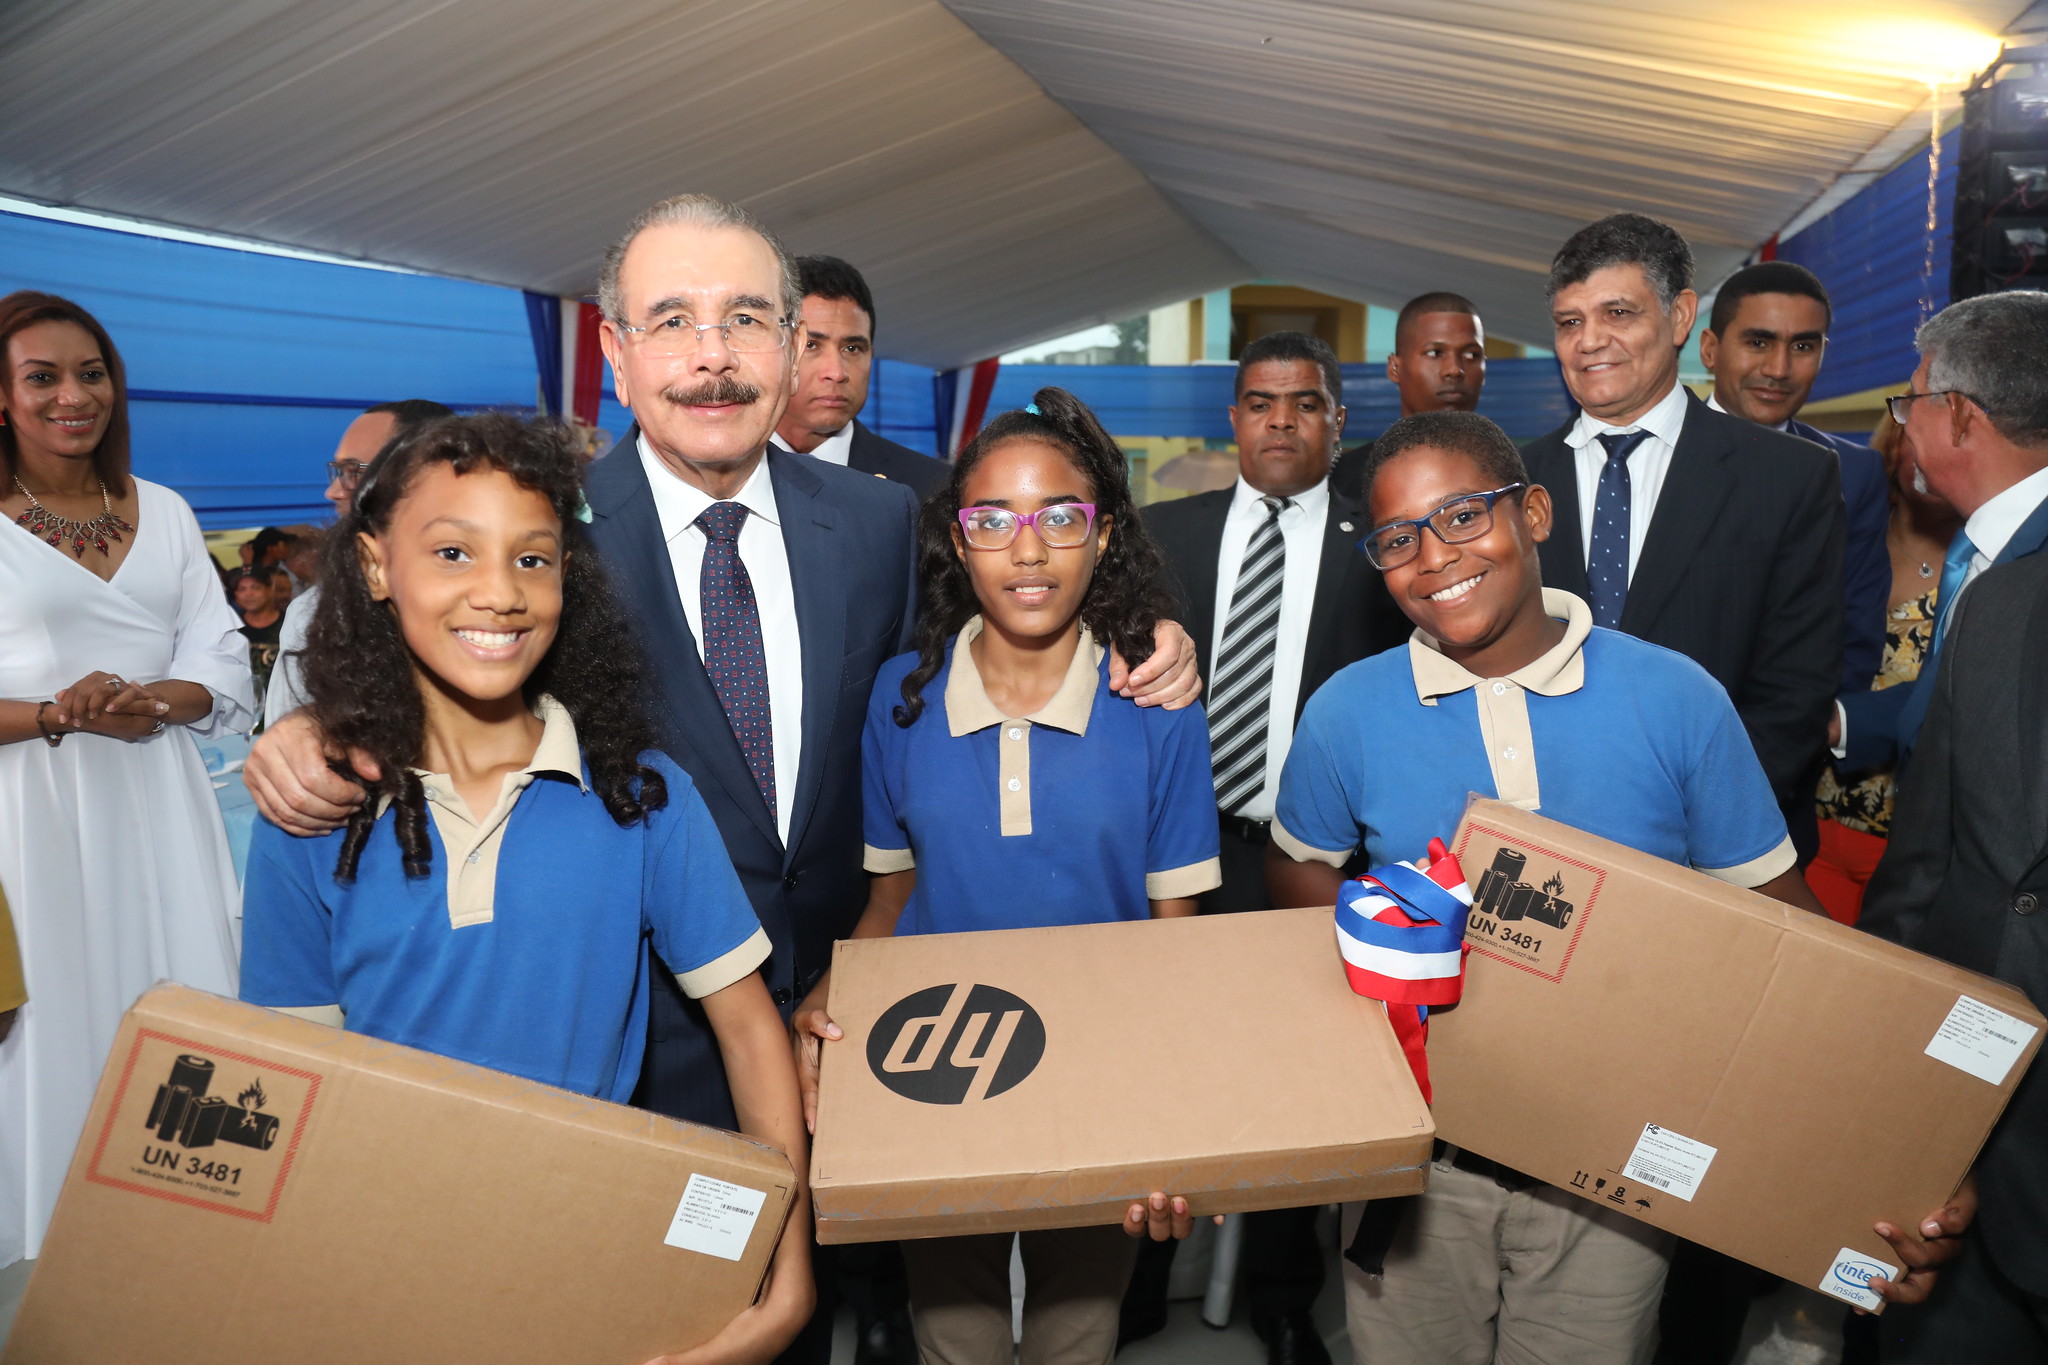 REPÚBLICA DOMINICANA: Presidente Danilo Medina entrega dos escuelas a comunidad de Manoguayabo. 1,610 estudiantes beneficiados con Jornada Escolar Extendida